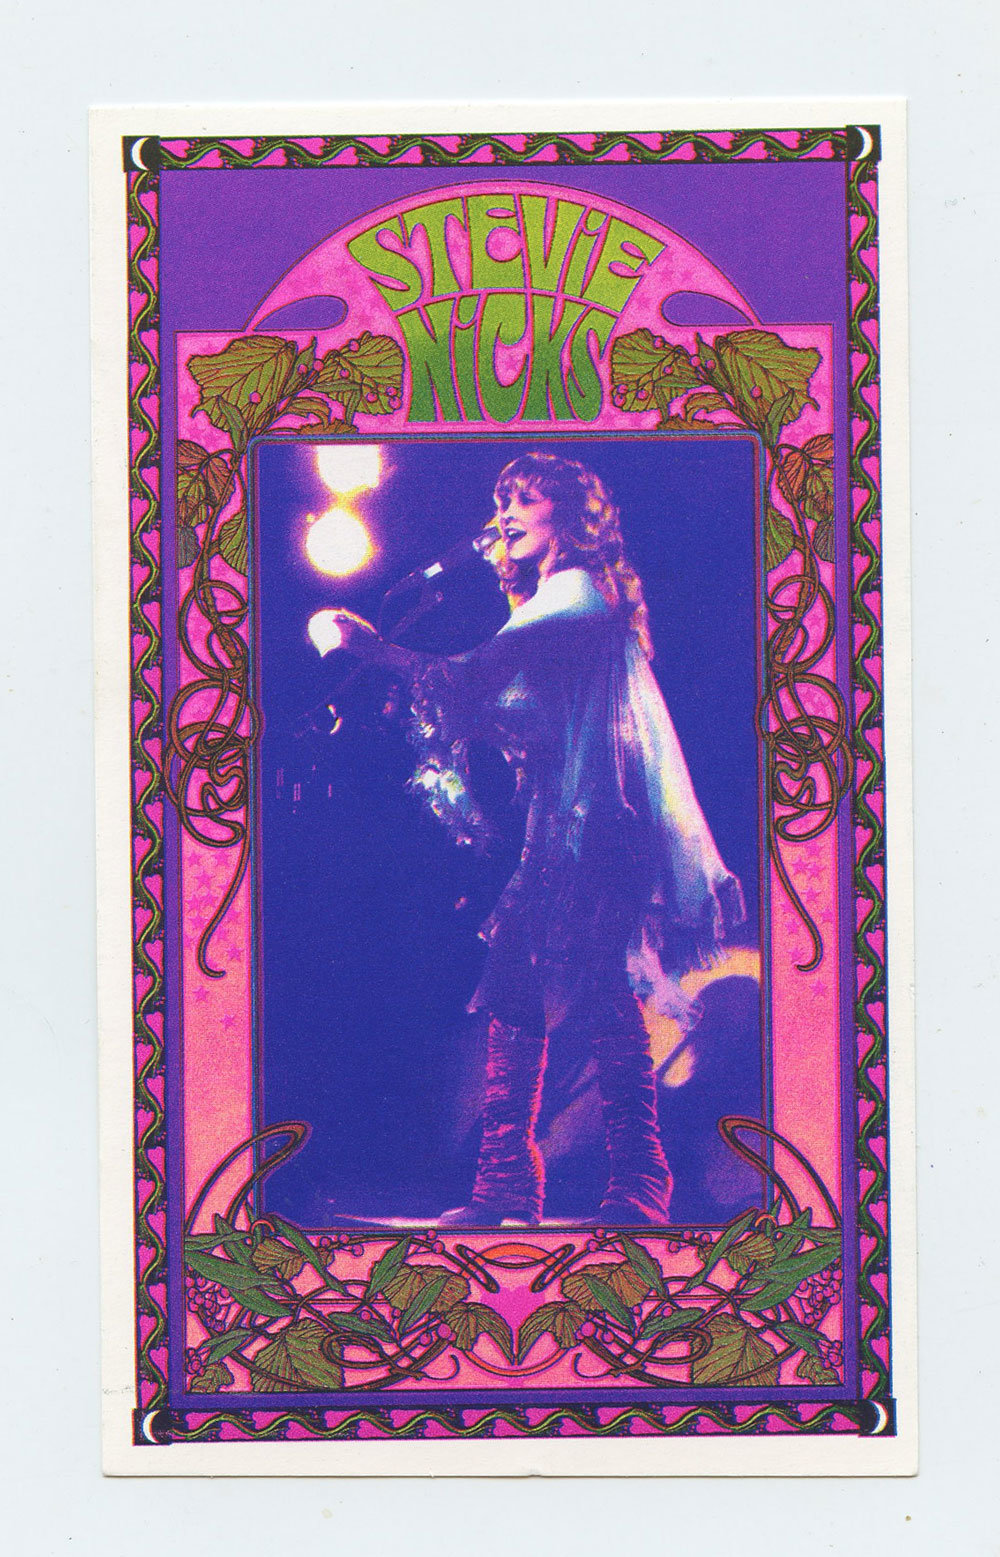 Stevie Nicks Card 1983 Wild Heart Album Promotion